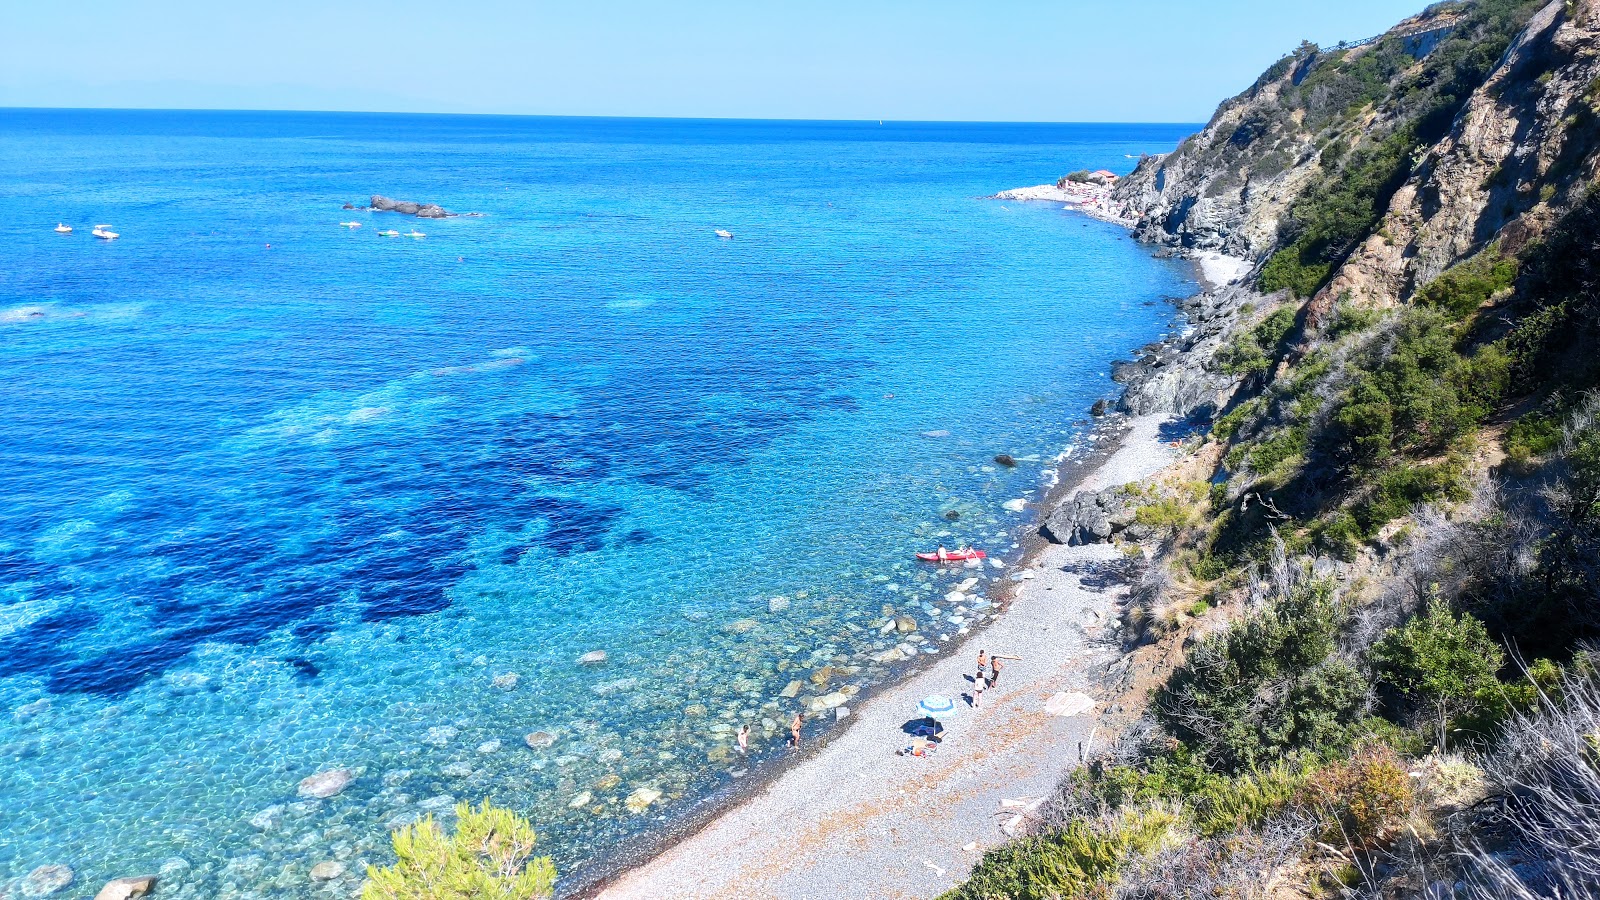 Foto van Spiaggia dell'Ogliera met gemiddeld niveau van netheid